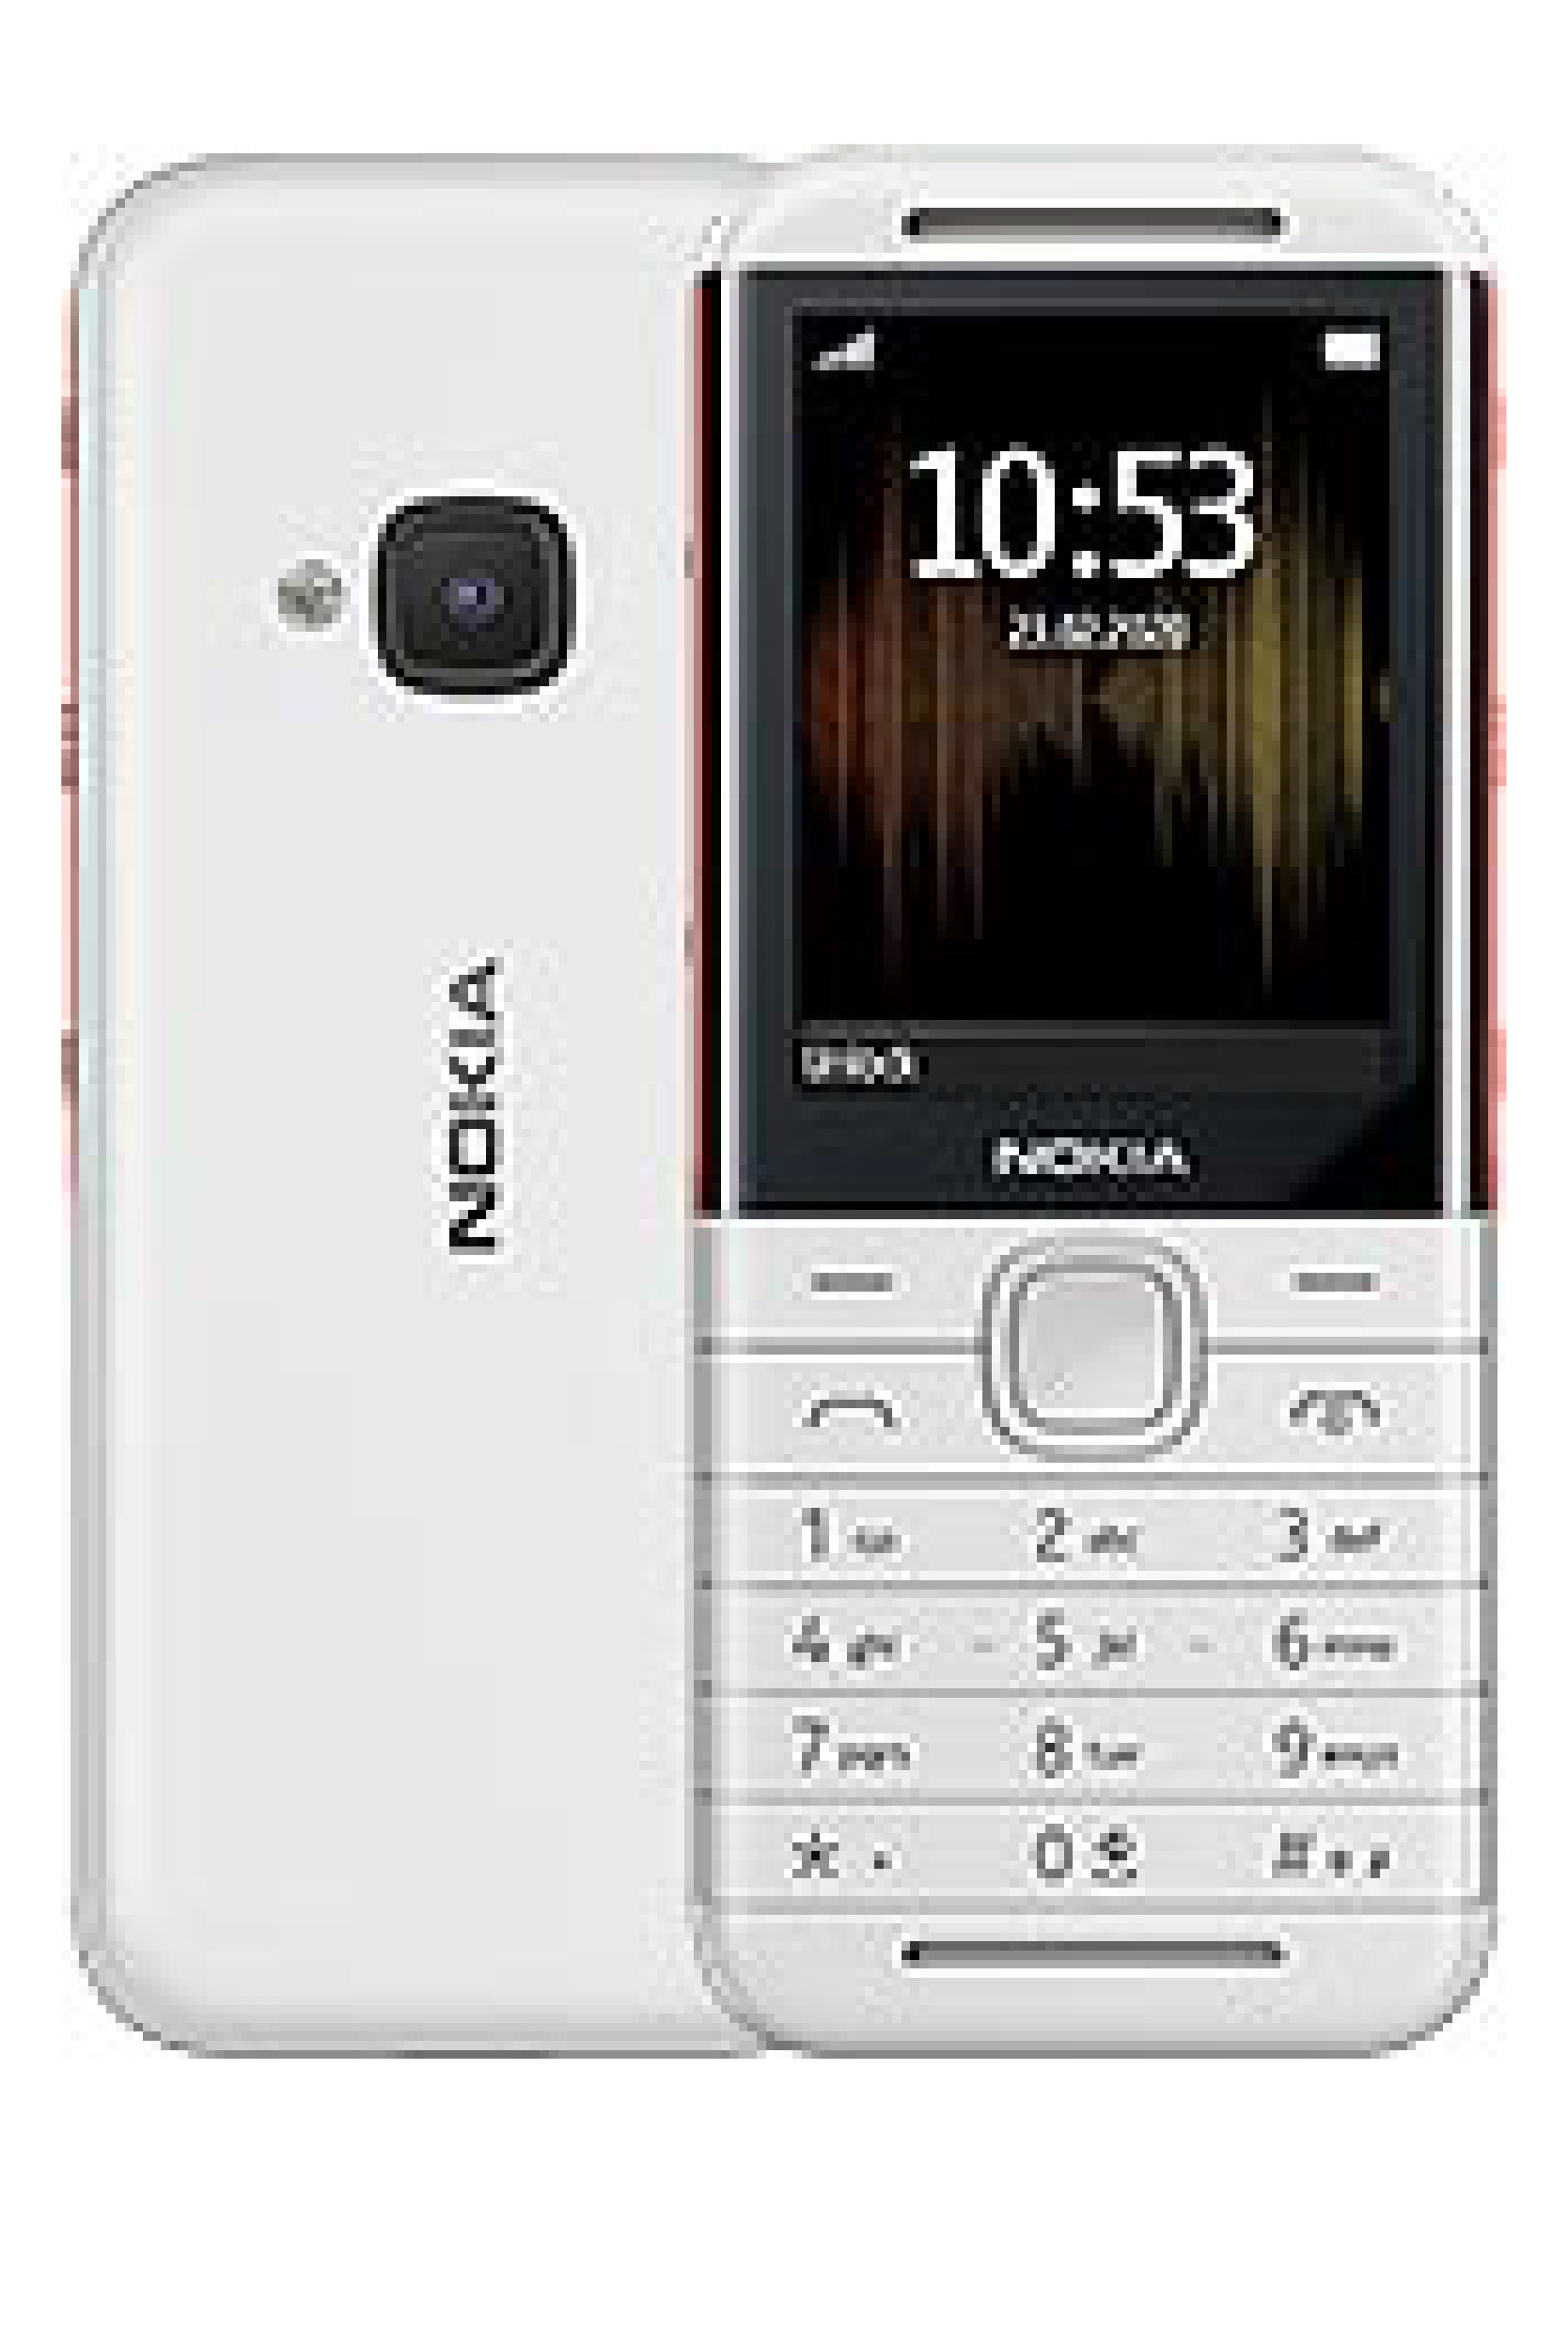 Nokia 5310 2020 Price In Pakistan Specs Daily Updated Propakistani